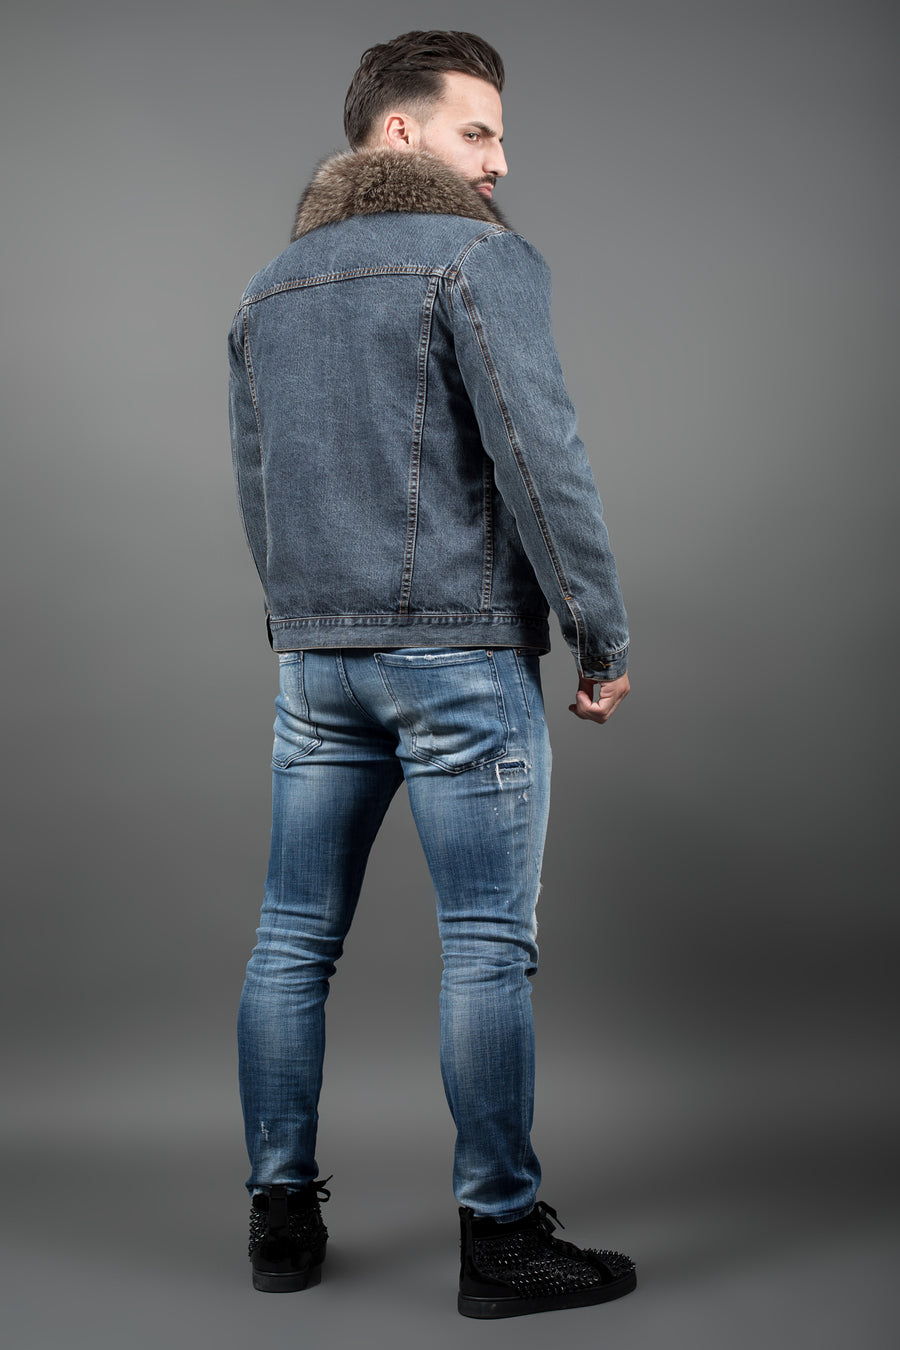 Jean Jacket Outfits For Men | Mens outfits, Denim jacket men, Men's denim  style